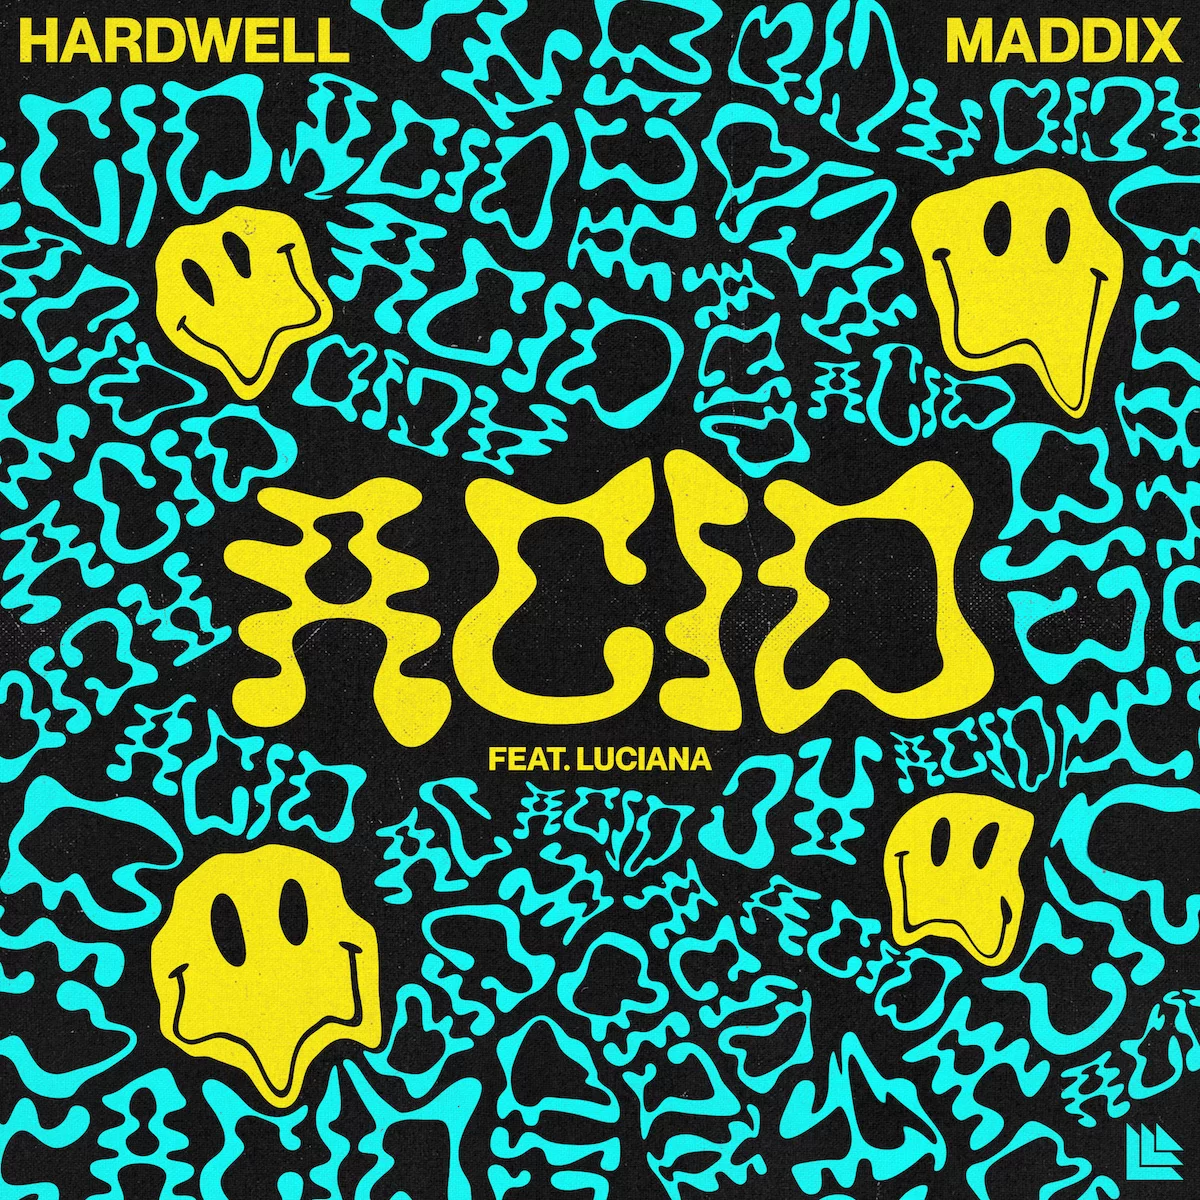 ACID – Hardwell & Maddix feat. Luciana